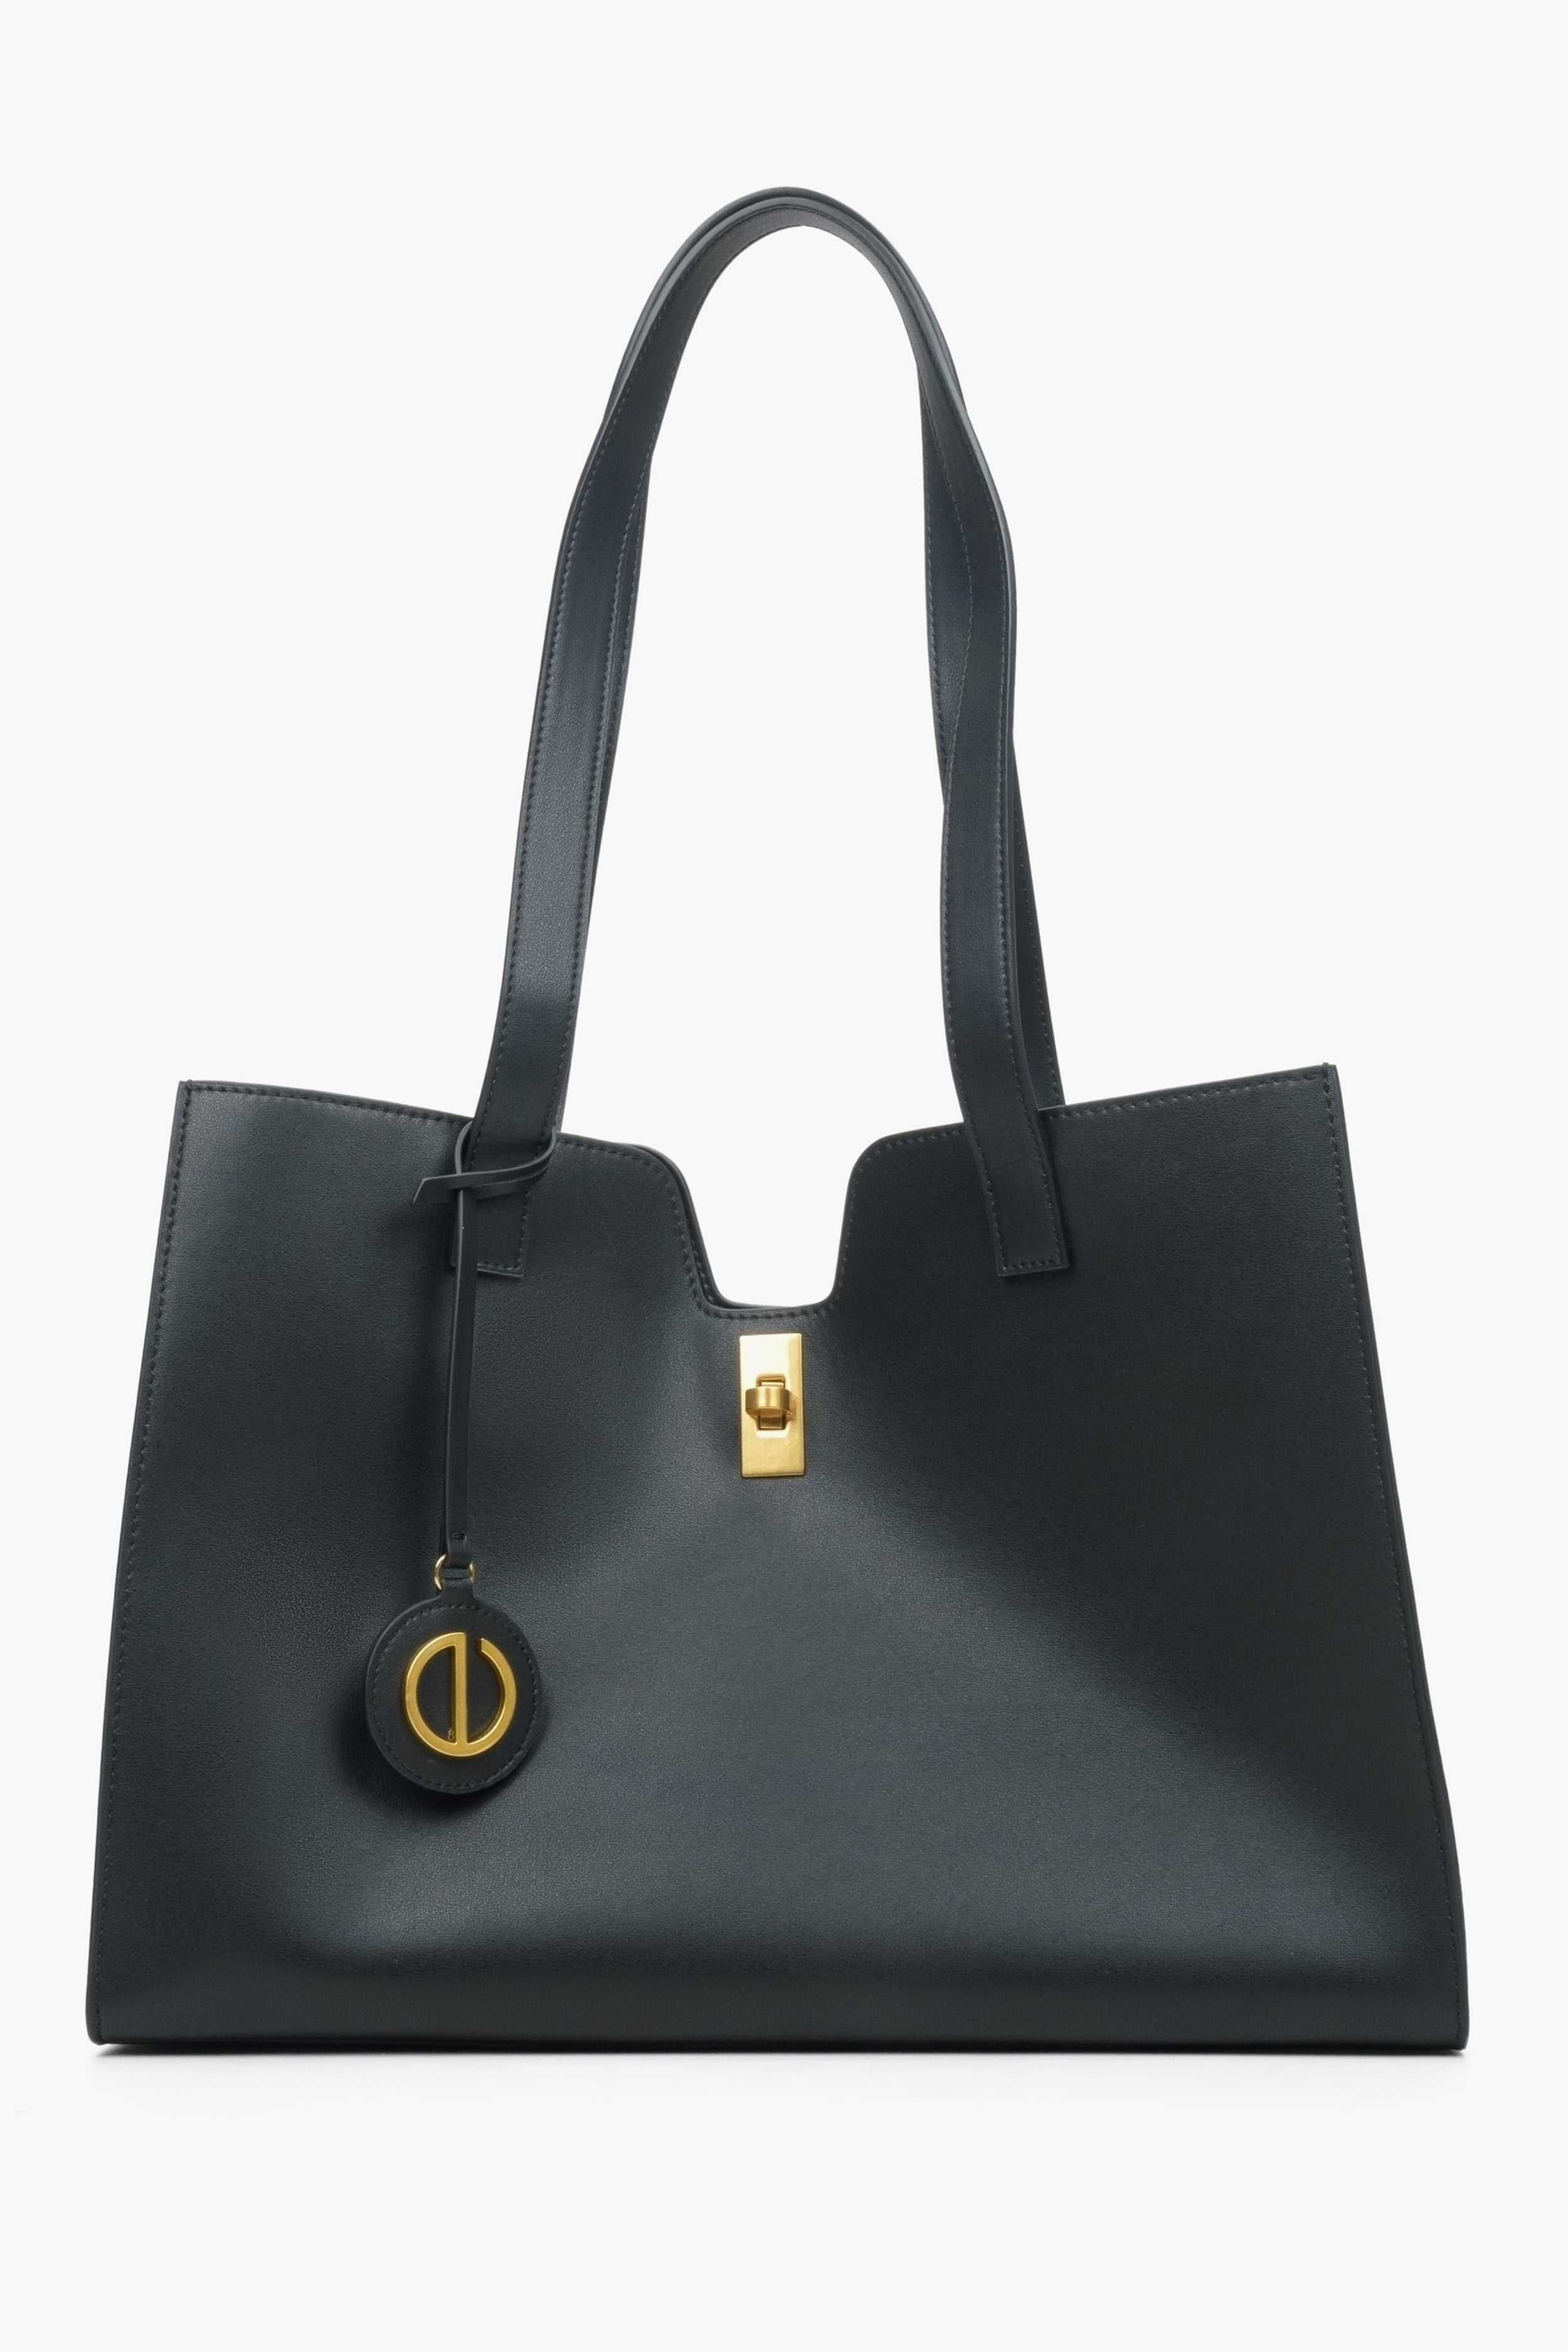 Estro: Czarna skórzana torebka damska typu shopper z ozdobnym pasem